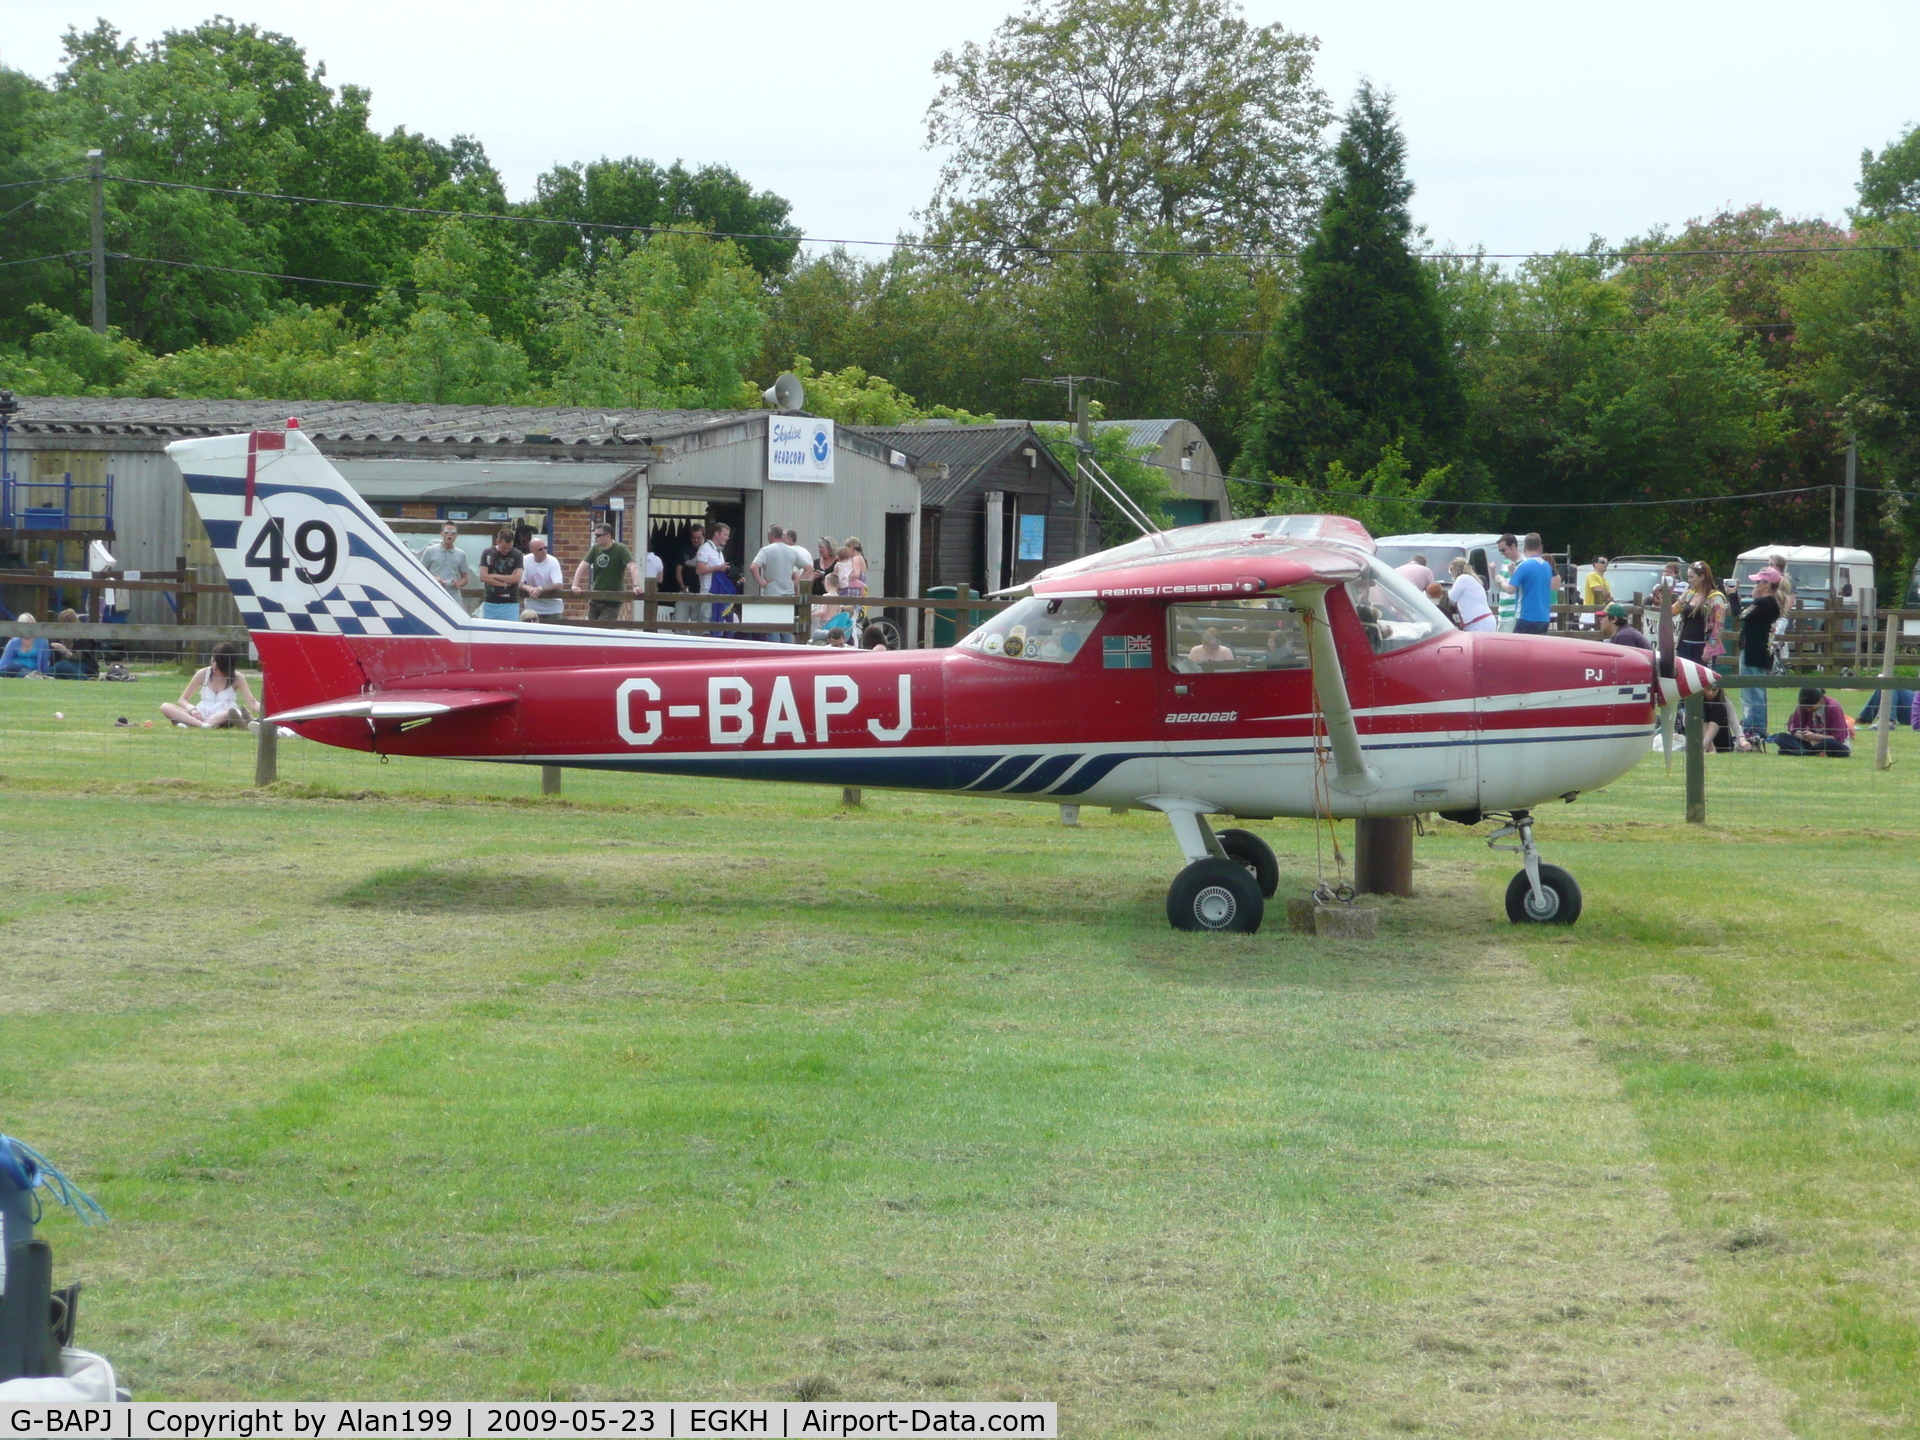 G-BAPJ, 1972 Reims FRA150L Aerobat C/N 0196, Parked at Headcorn Aerodrome, Kent, UK